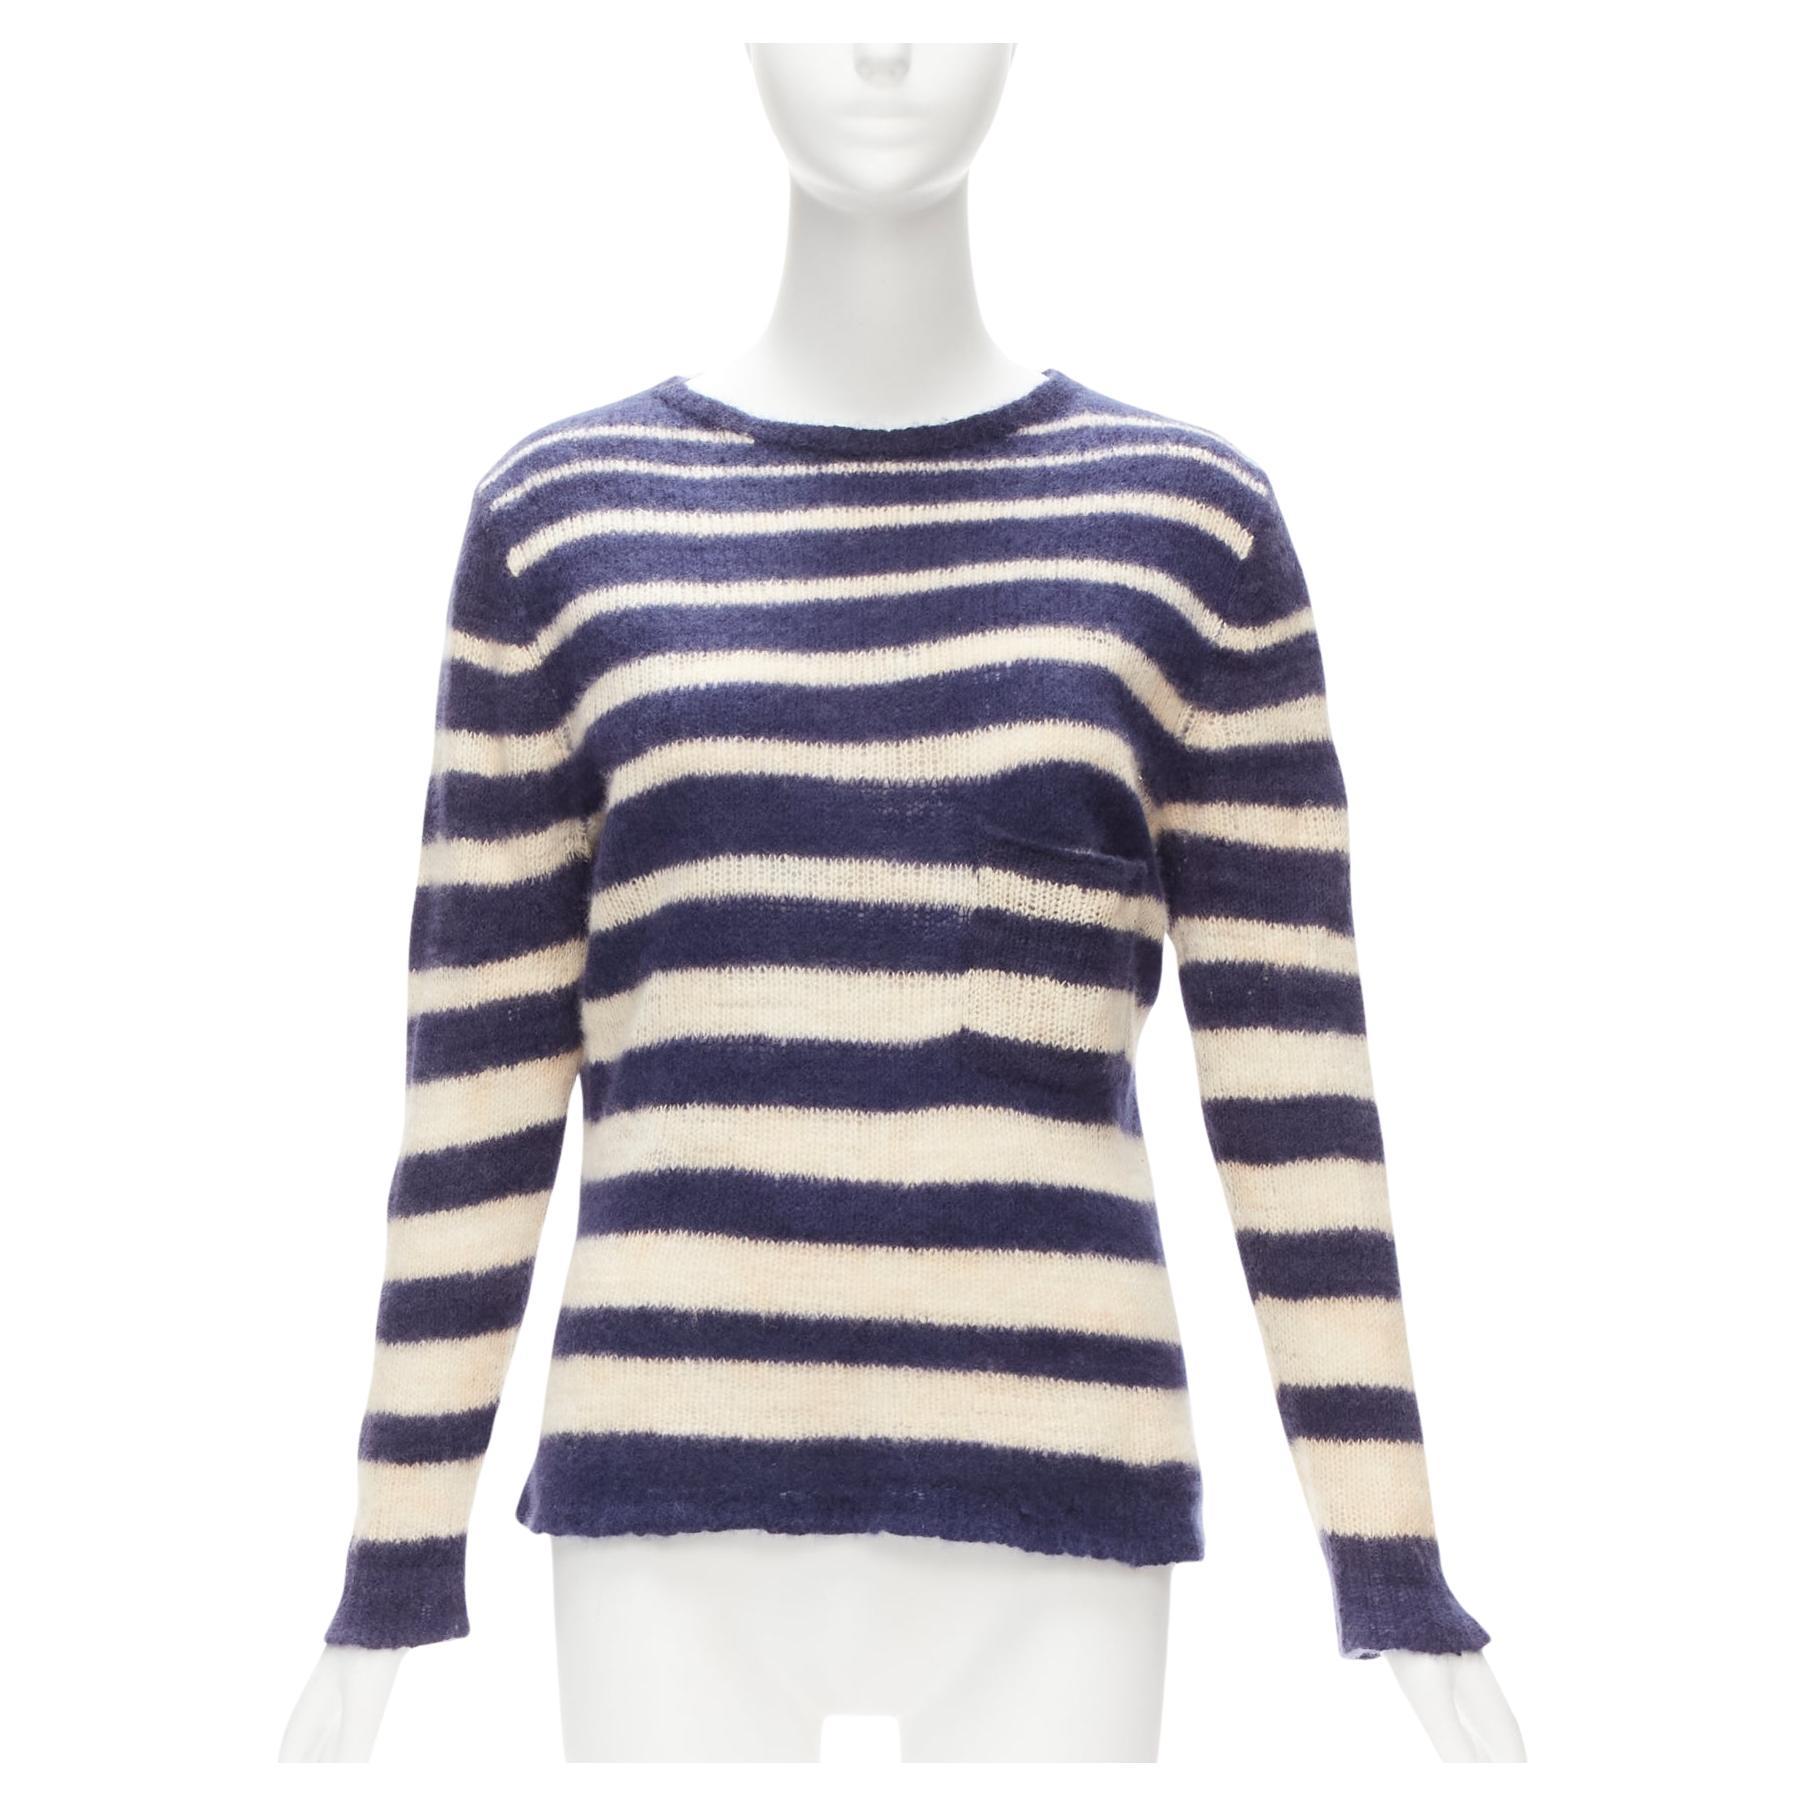 THE ELDER STATESMAN 100% cashmere navy cream nautical stripes sweater S For Sale